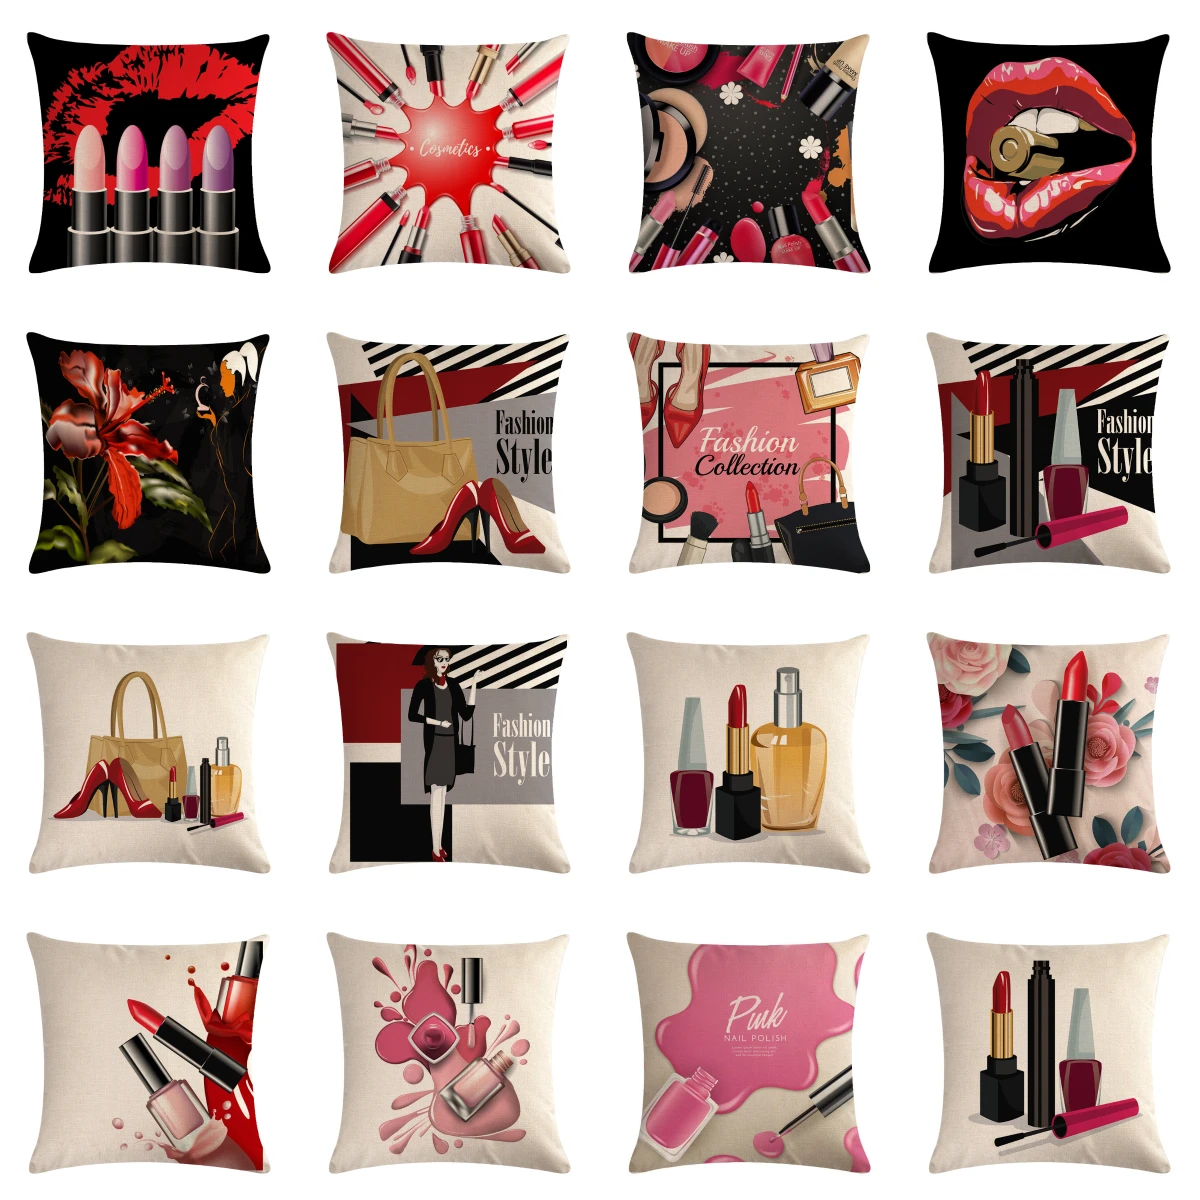 

Fashion Lady Linen Women Cosmetics Print Cushion Cover Lipsticks Perfume Bottles Bags Pillows Decorative Sofa Couch Pillows Case